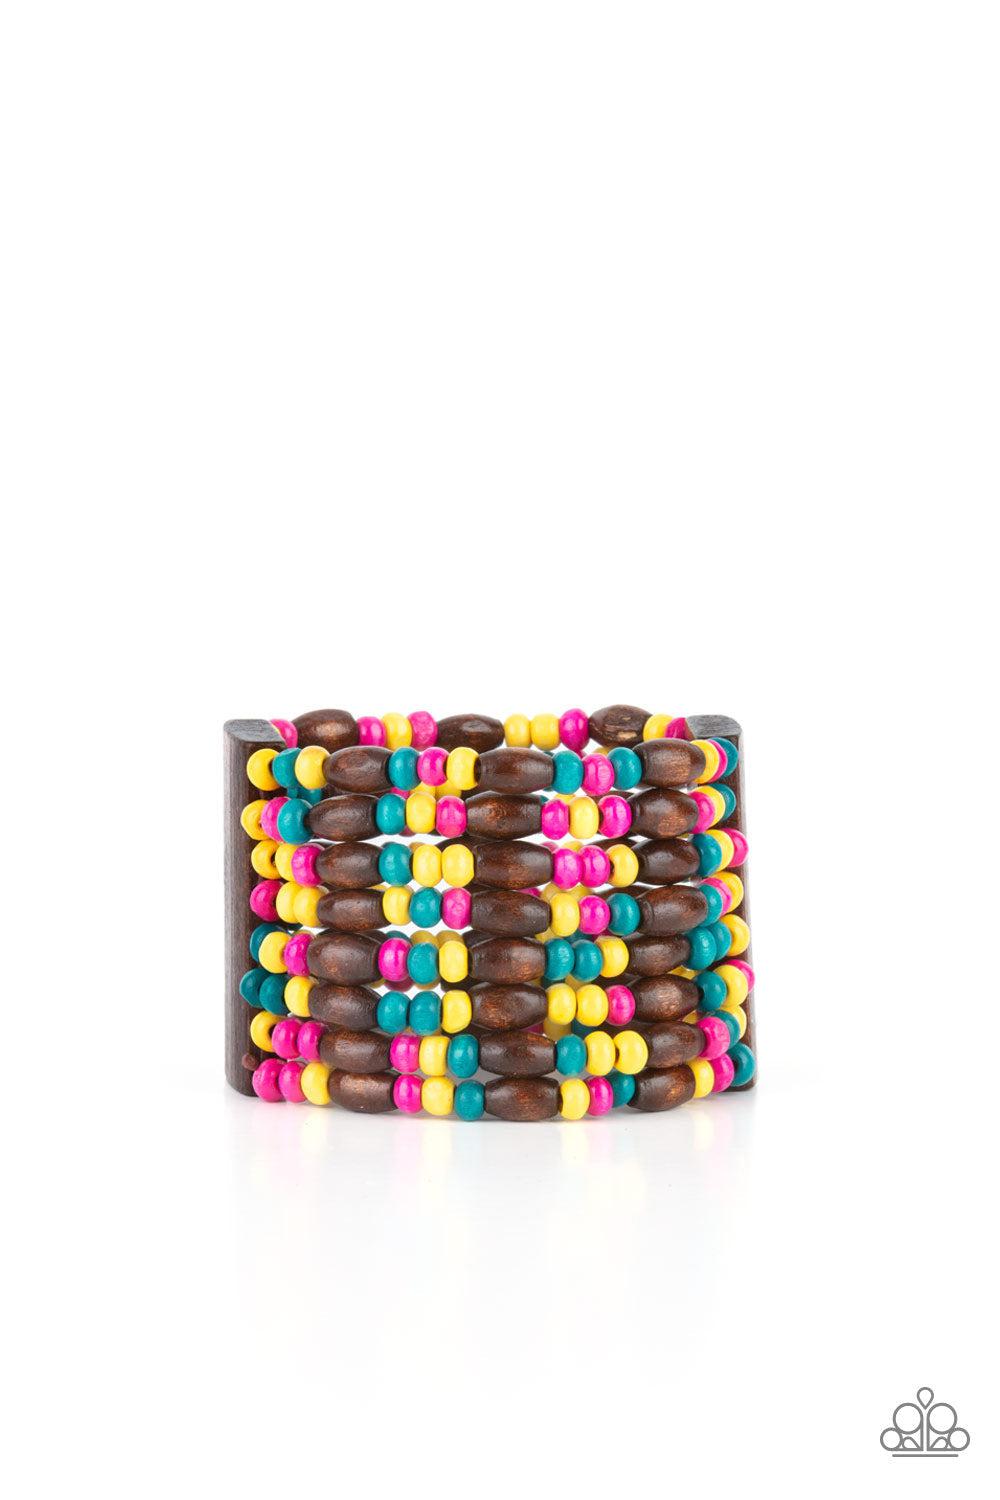 Tropical Nirvana Multi Wood Bracelet - Paparazzi Accessories- lightbox - CarasShop.com - $5 Jewelry by Cara Jewels